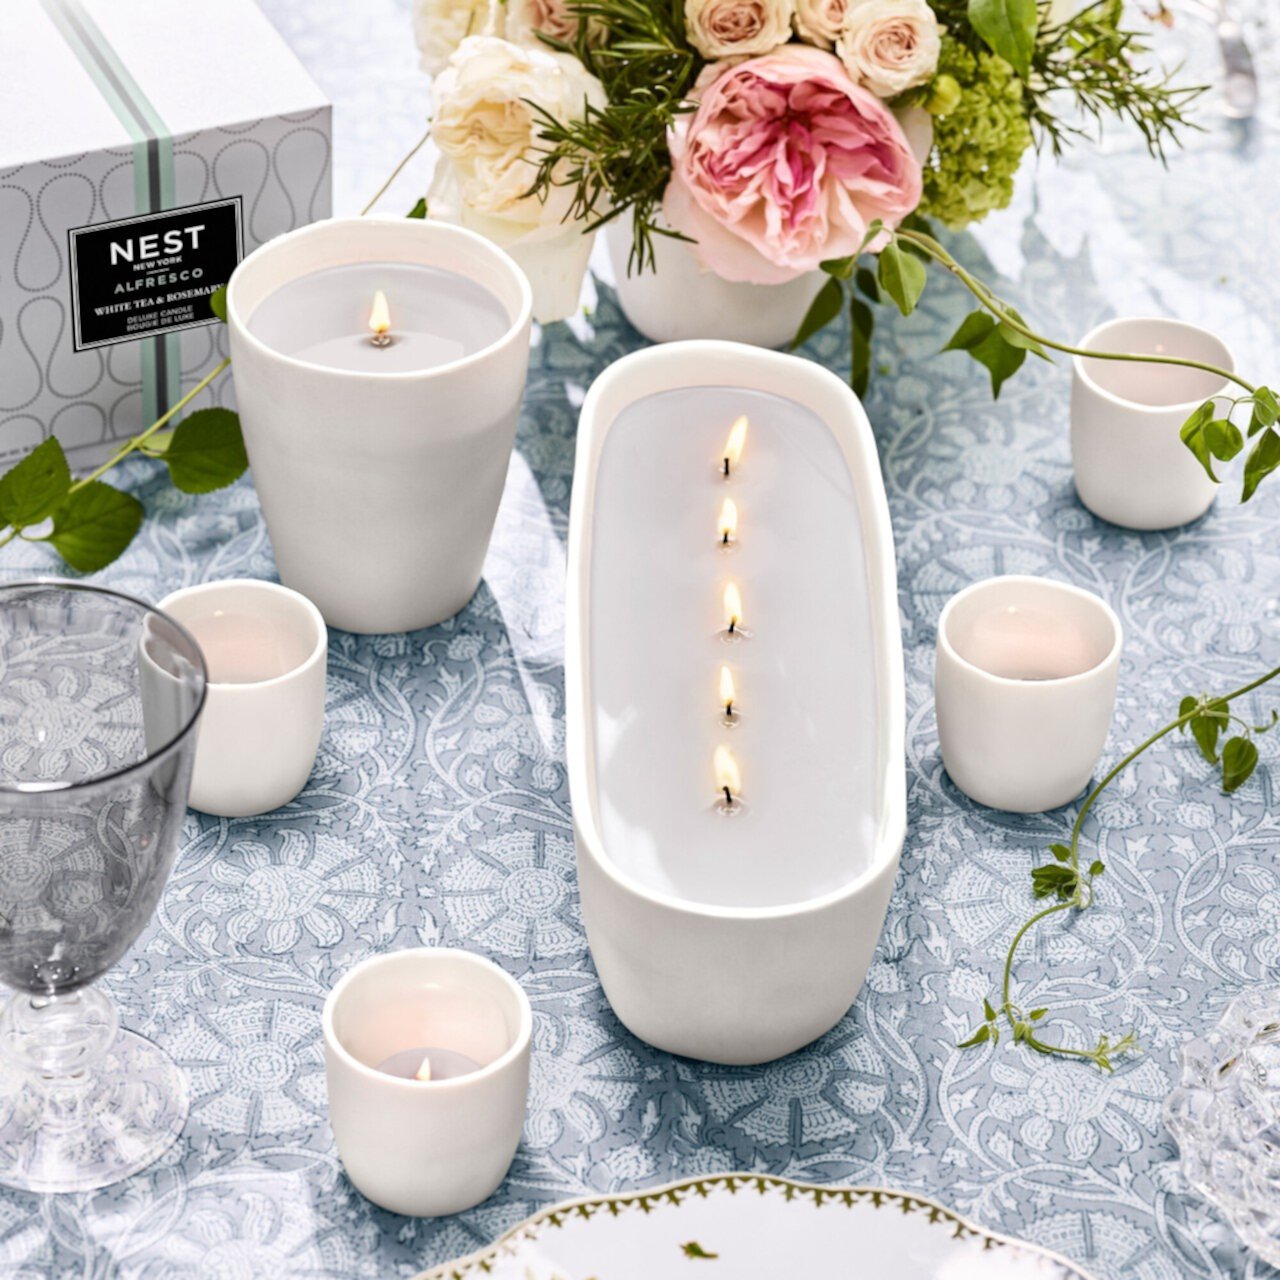 White Tea & Rosemary Alfresco Candle Nest New York